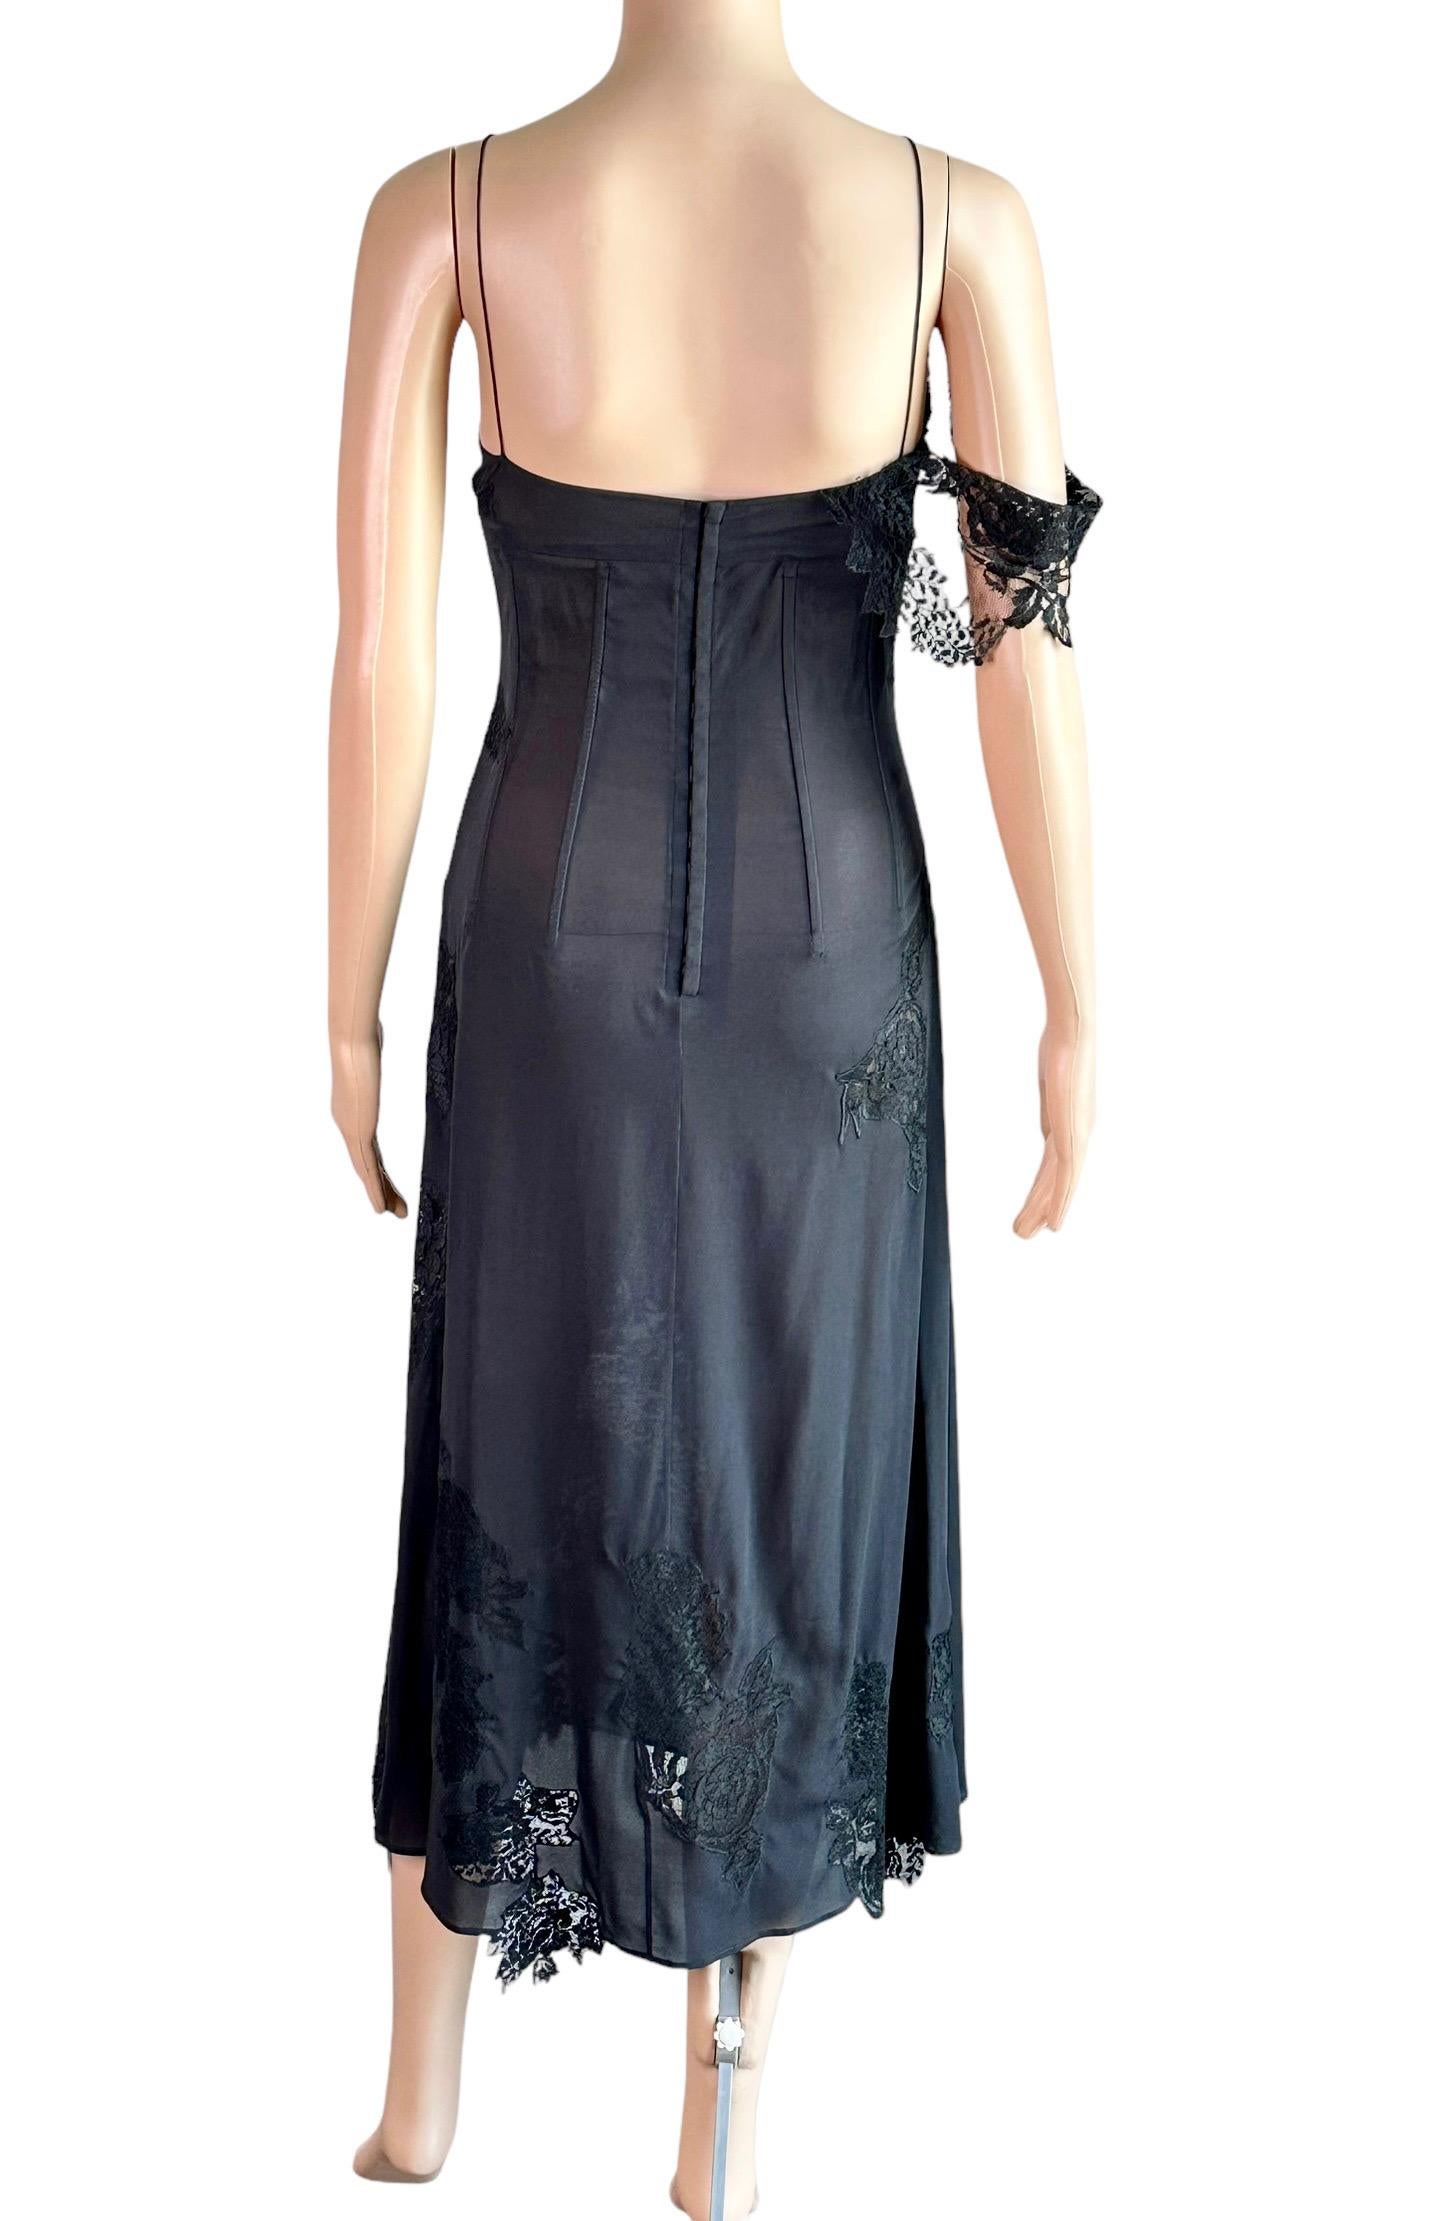 Dolce & Gabbana S/S 2002 Runway Unworn Sheer Lace Corset Black Midi Dress For Sale 2